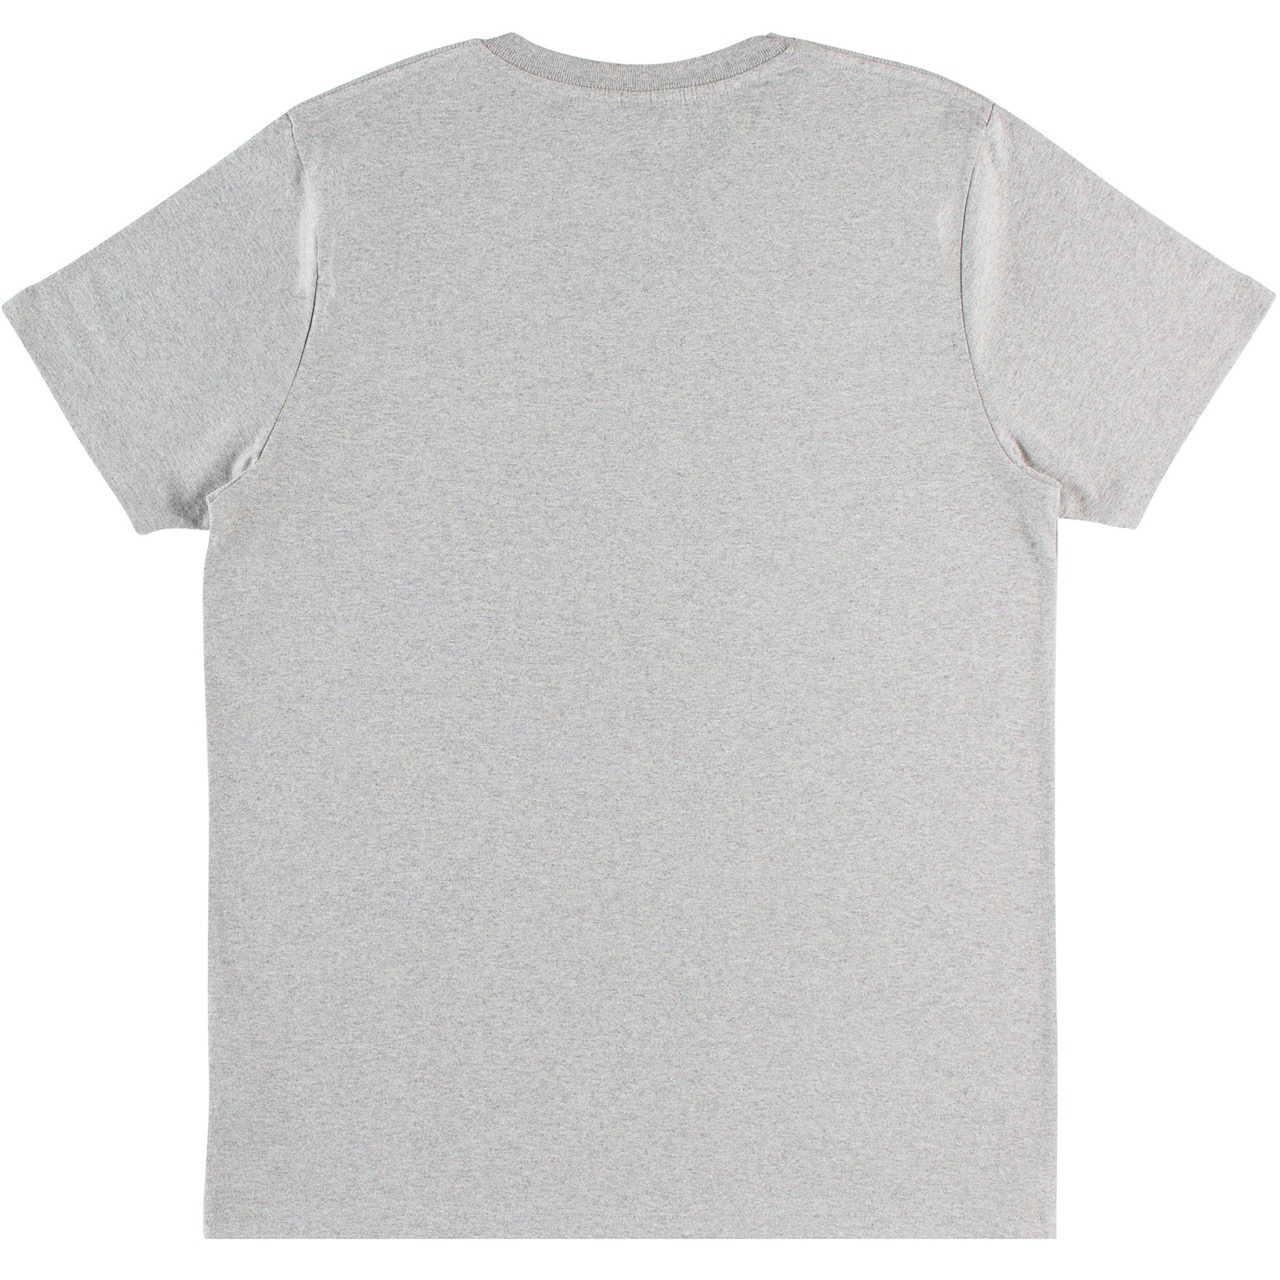 Camiseta gris manga corta algodón ogánico - Holocene Classics Espalda